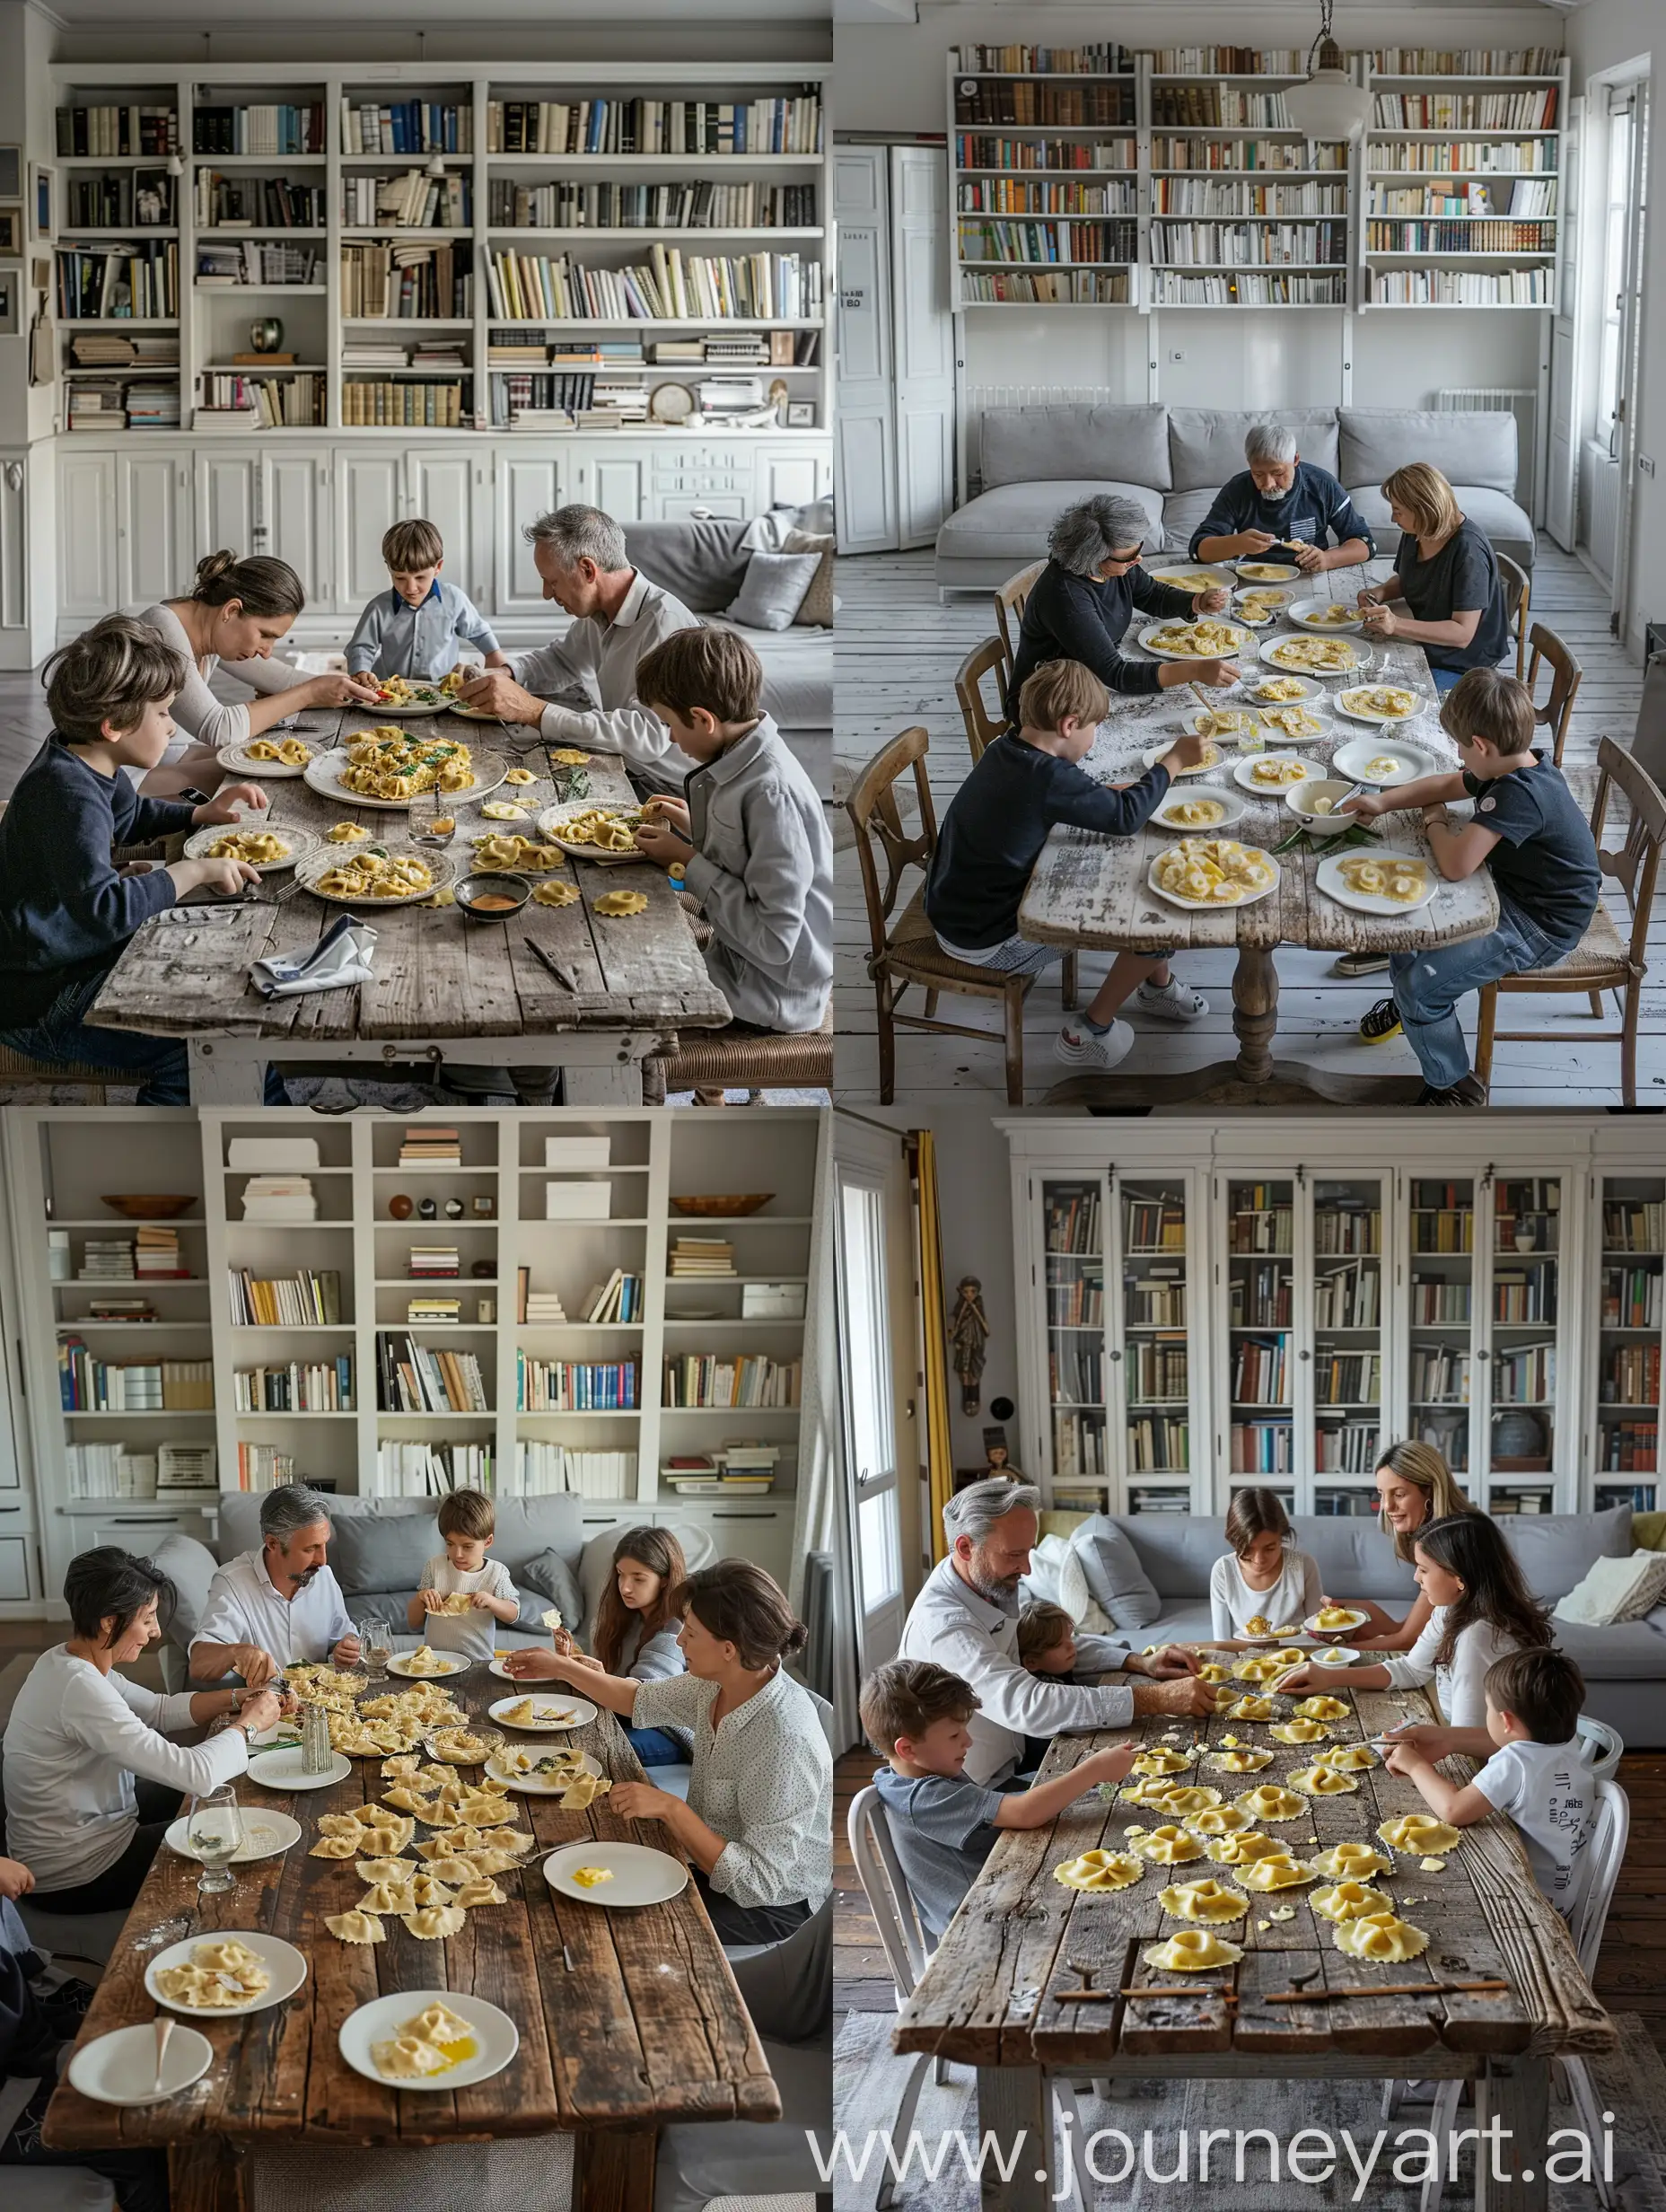 Intergenerational-Family-Dinner-with-Stuffed-Ravioli-Feast